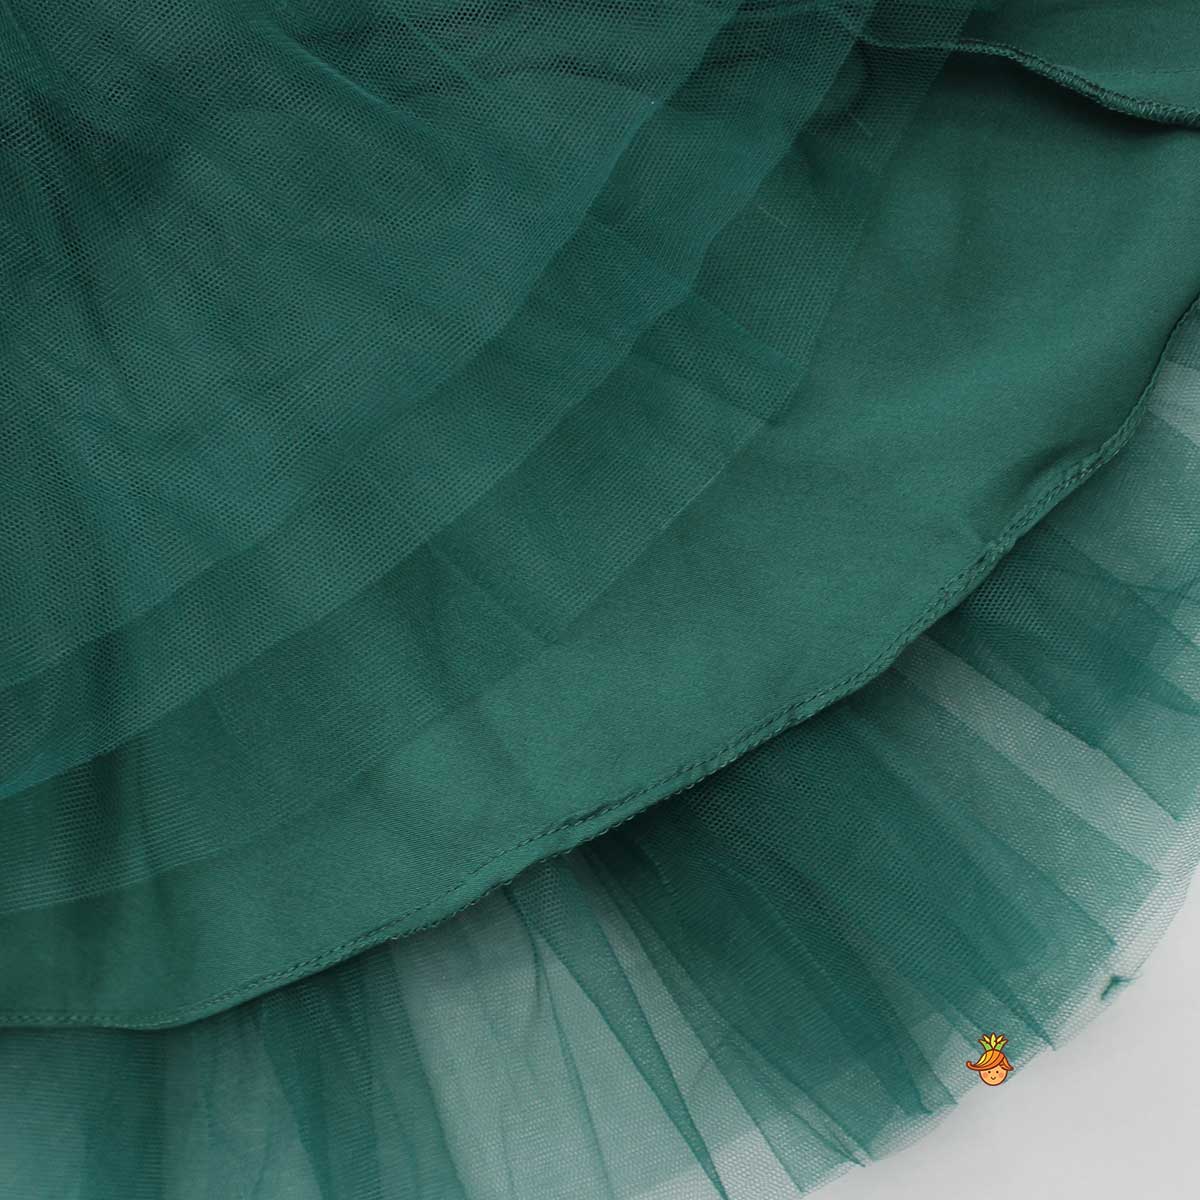 Pre Order: Charming Green Ruffled One Shoulder Dress